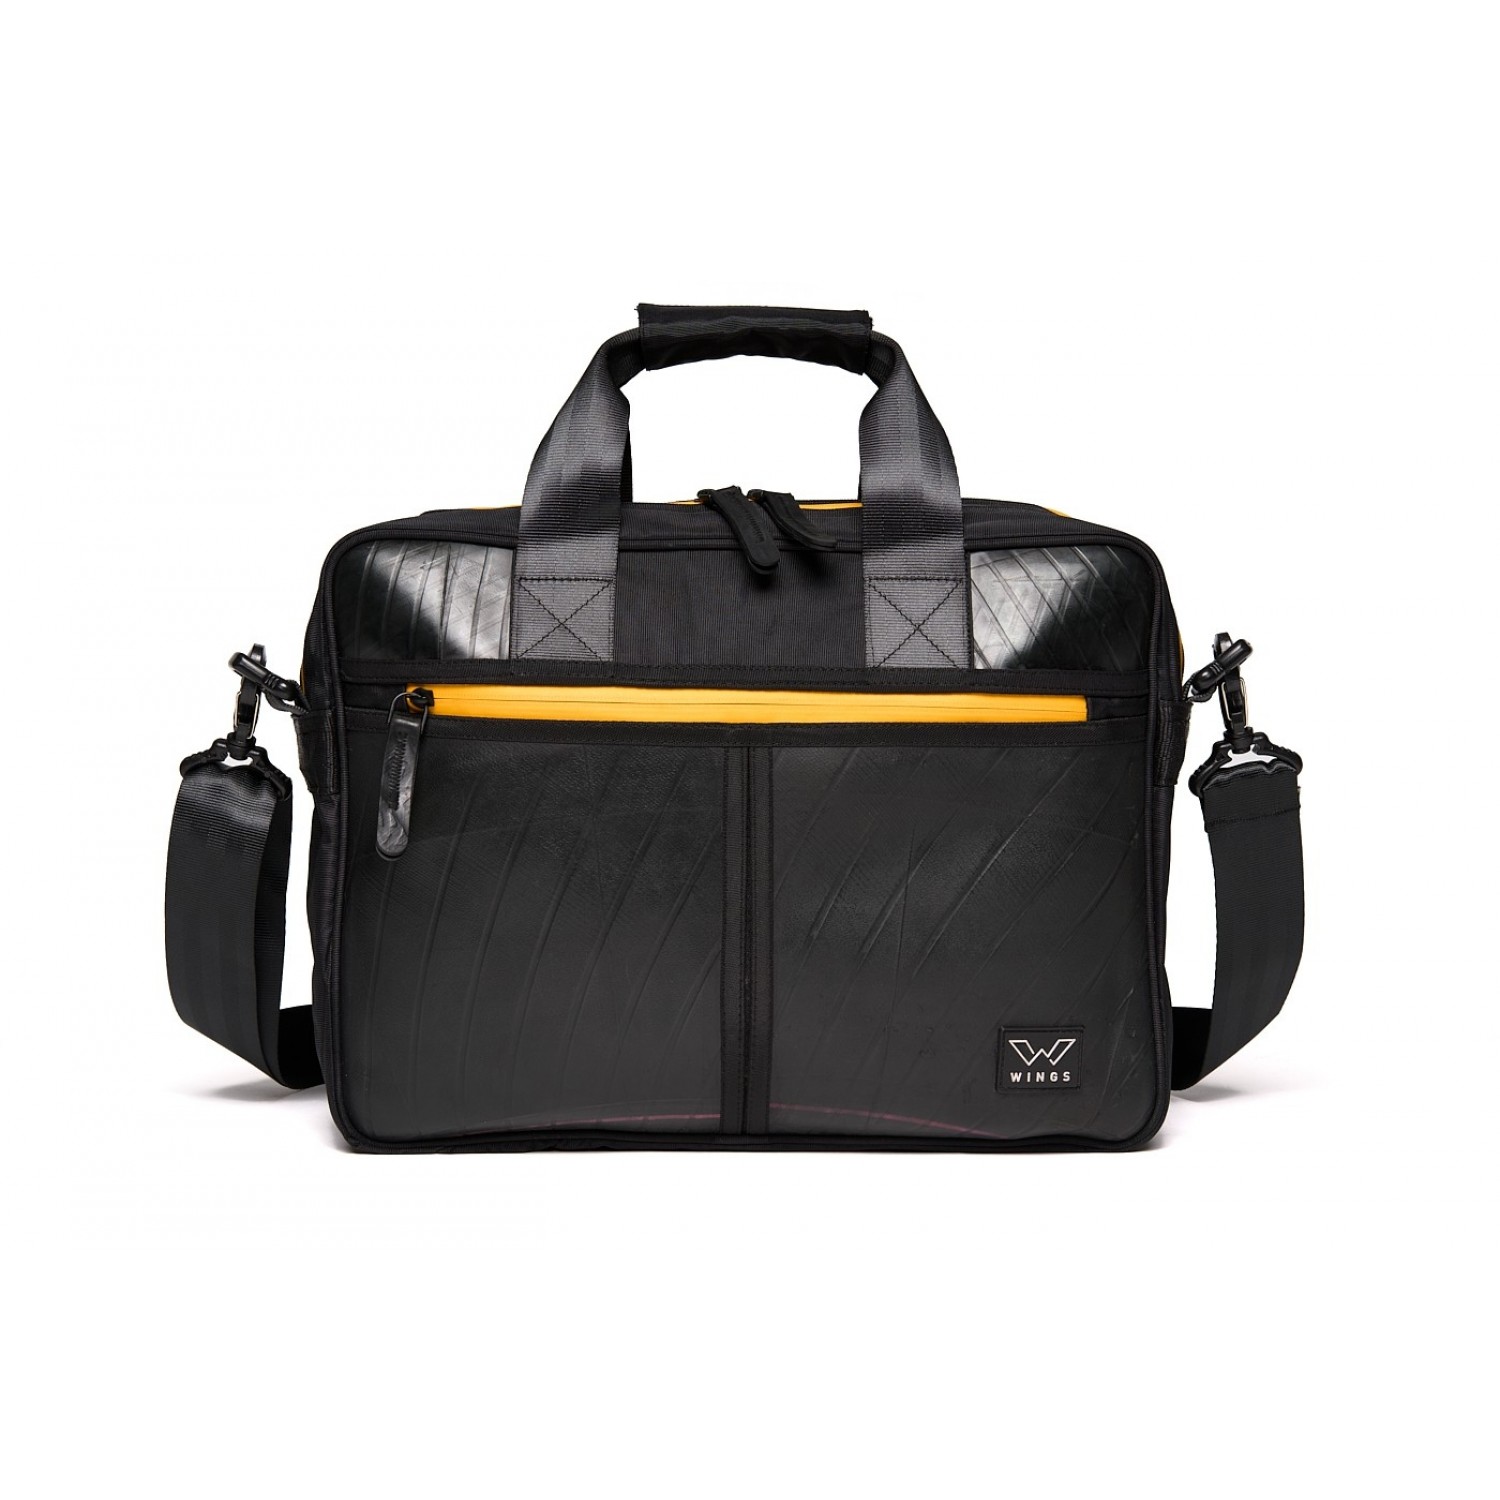 Ecowings Business Bag Laptop Bag Elegant Eagle, yellow